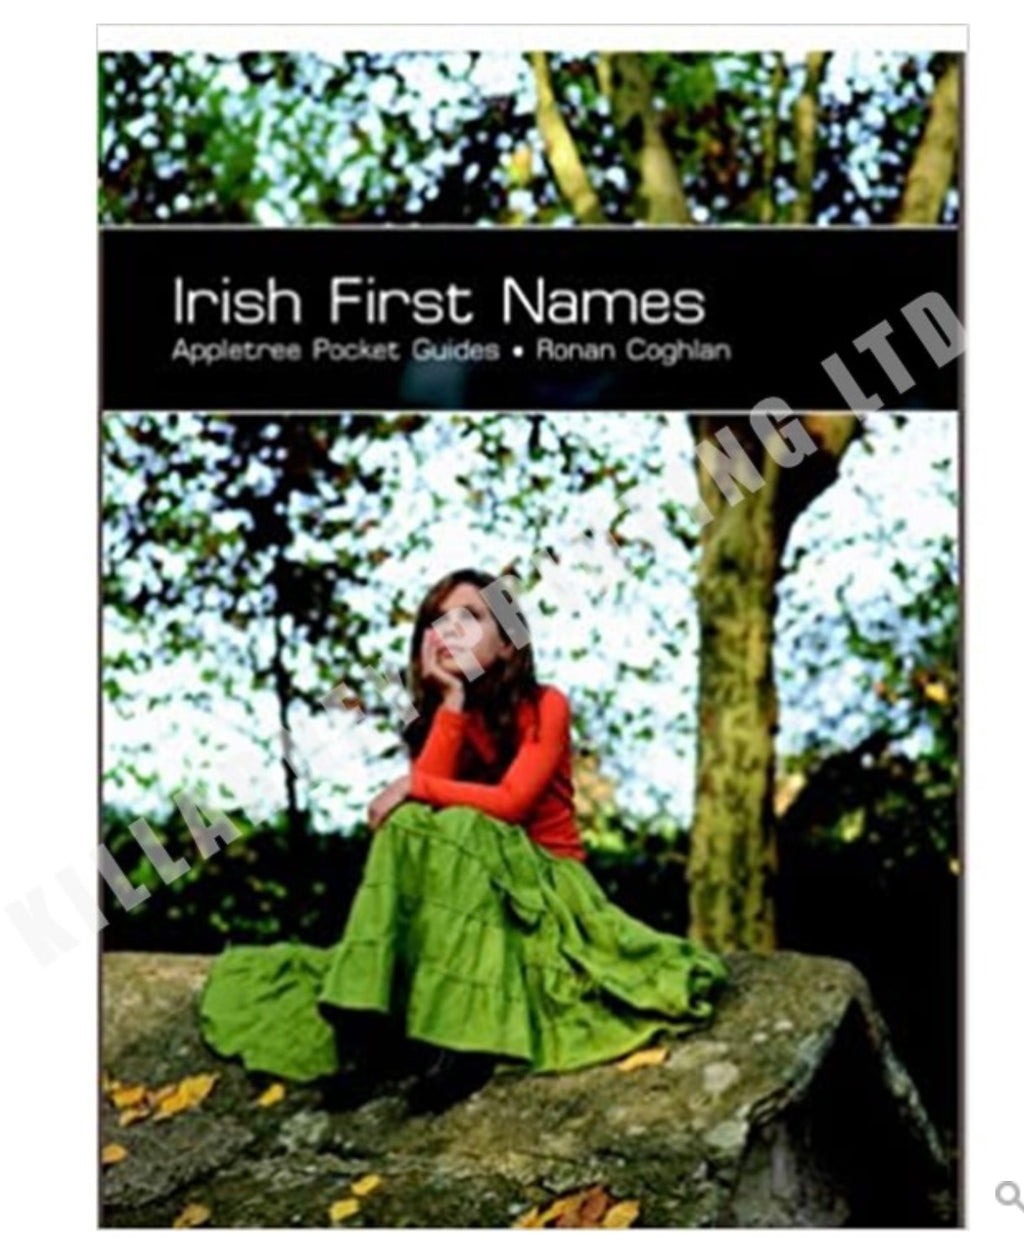 IRISH FIRST NAMES REF: 19620